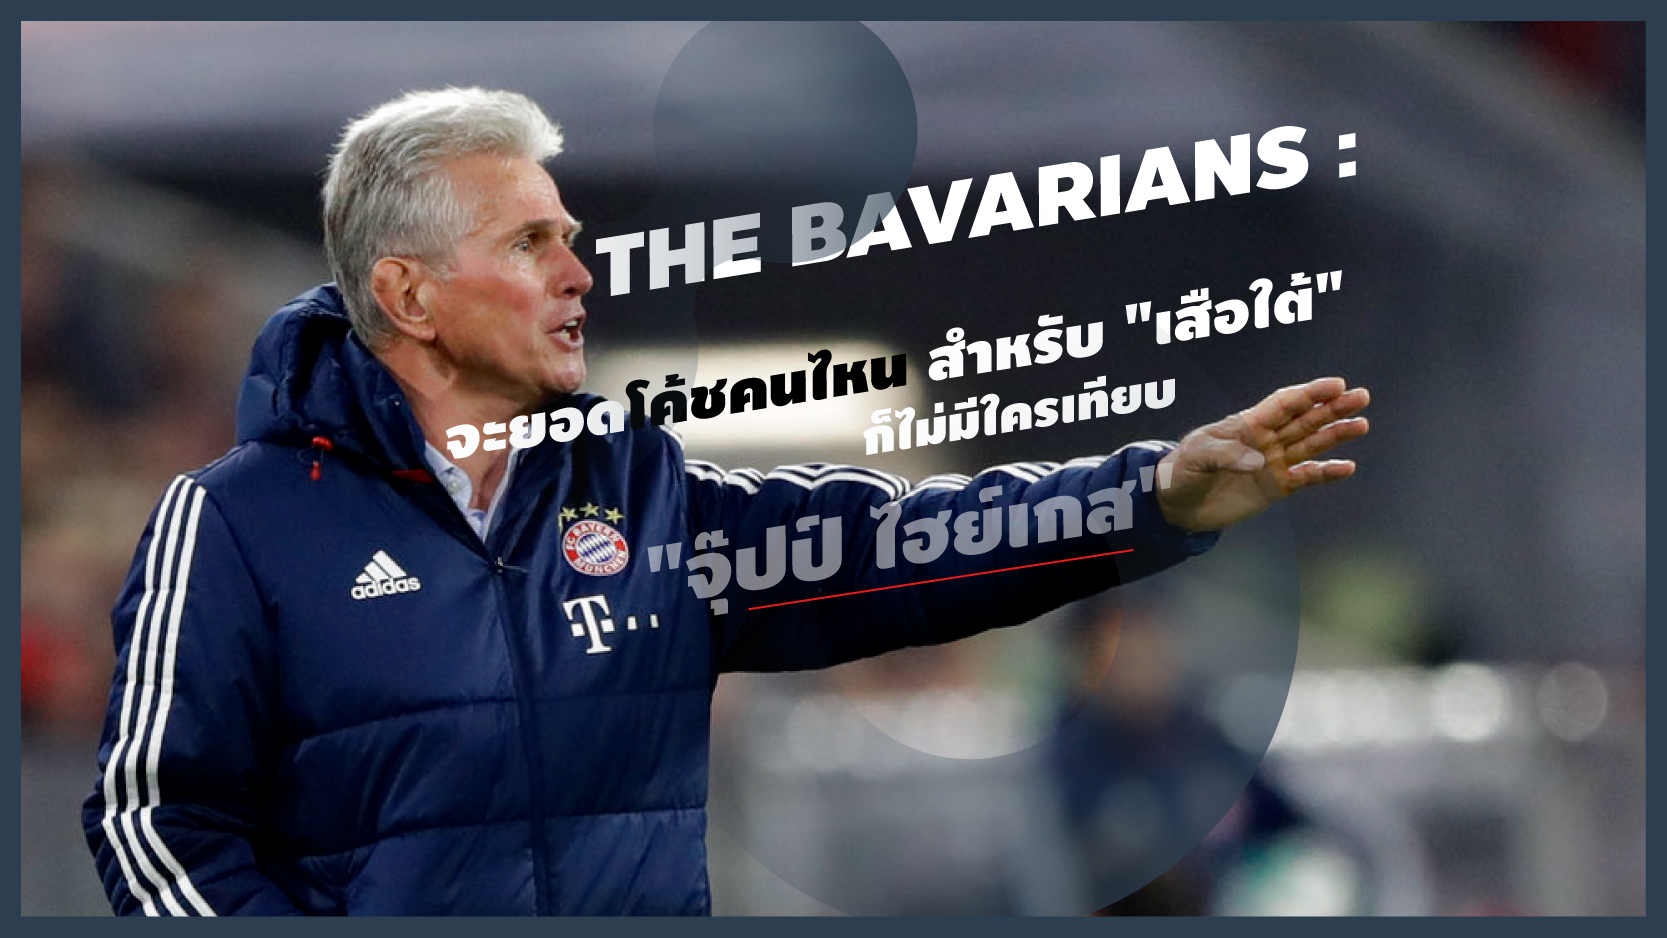 The Bavarians : จะยอดโค้ชคนไหน สำหรับ "เสือใต้" ก็ไม่มีใครเทียบ "จุ๊ปป์ ไฮย์เกส"